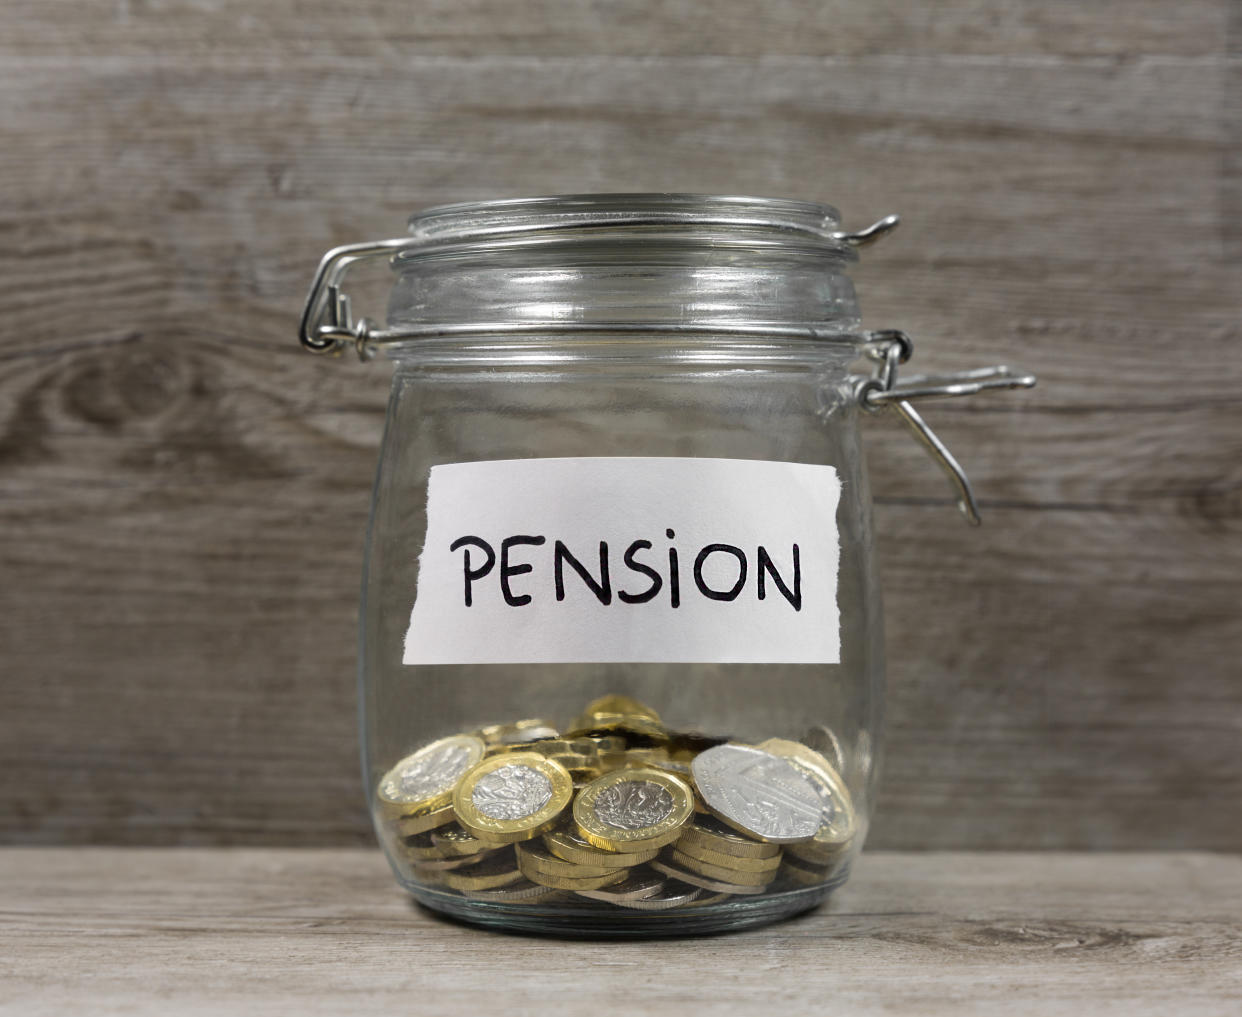 pensions Photo taken in London, United Kingdom